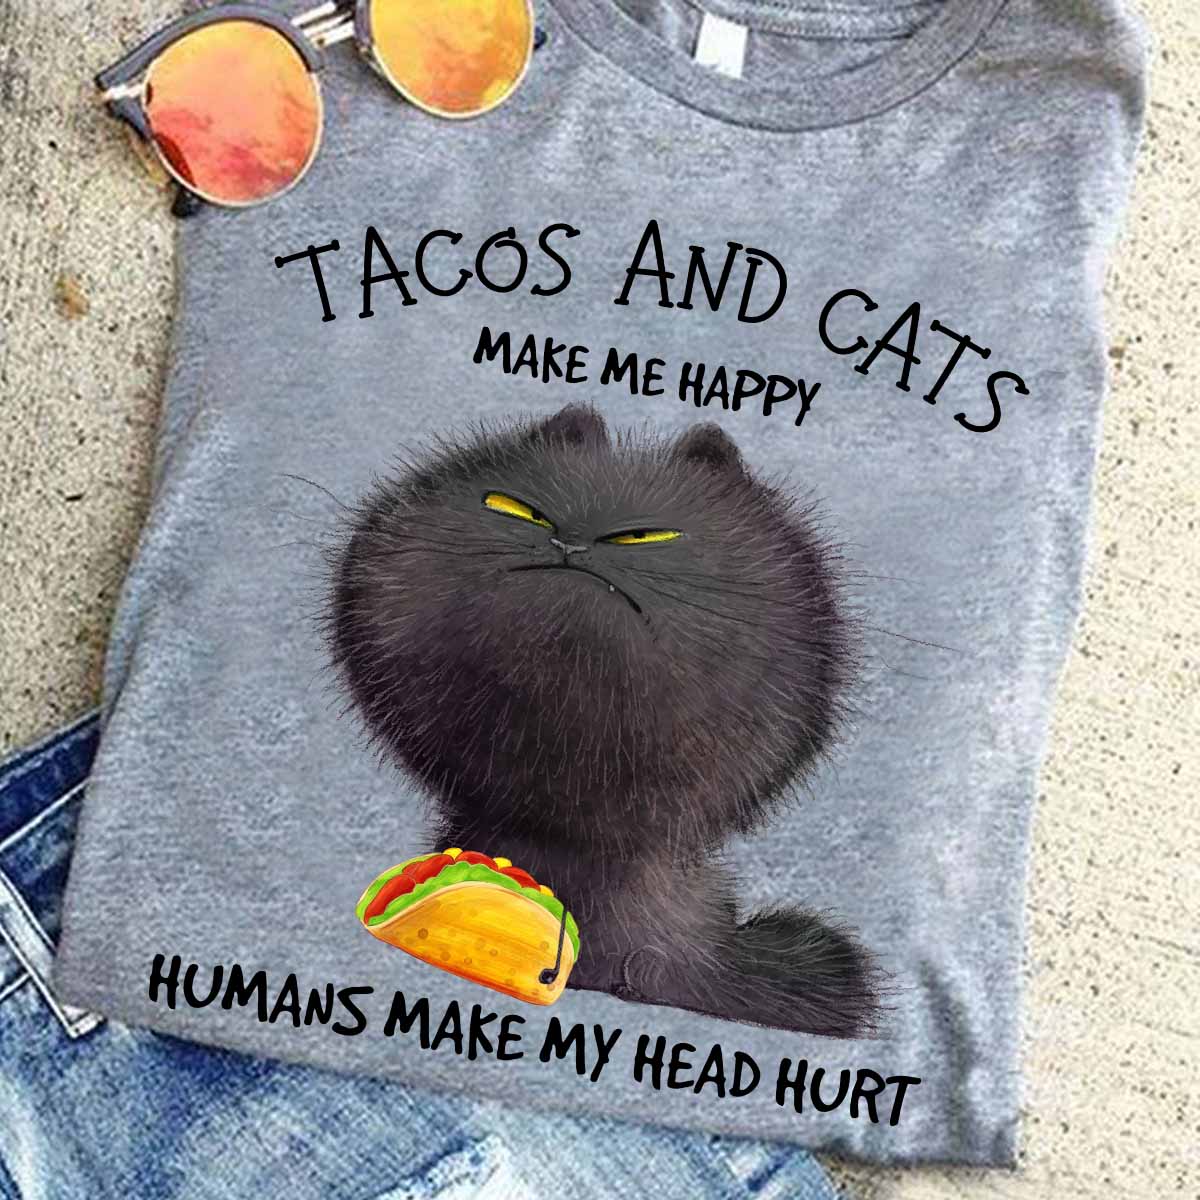 Tacos and cats make me happy humans make my head hurt